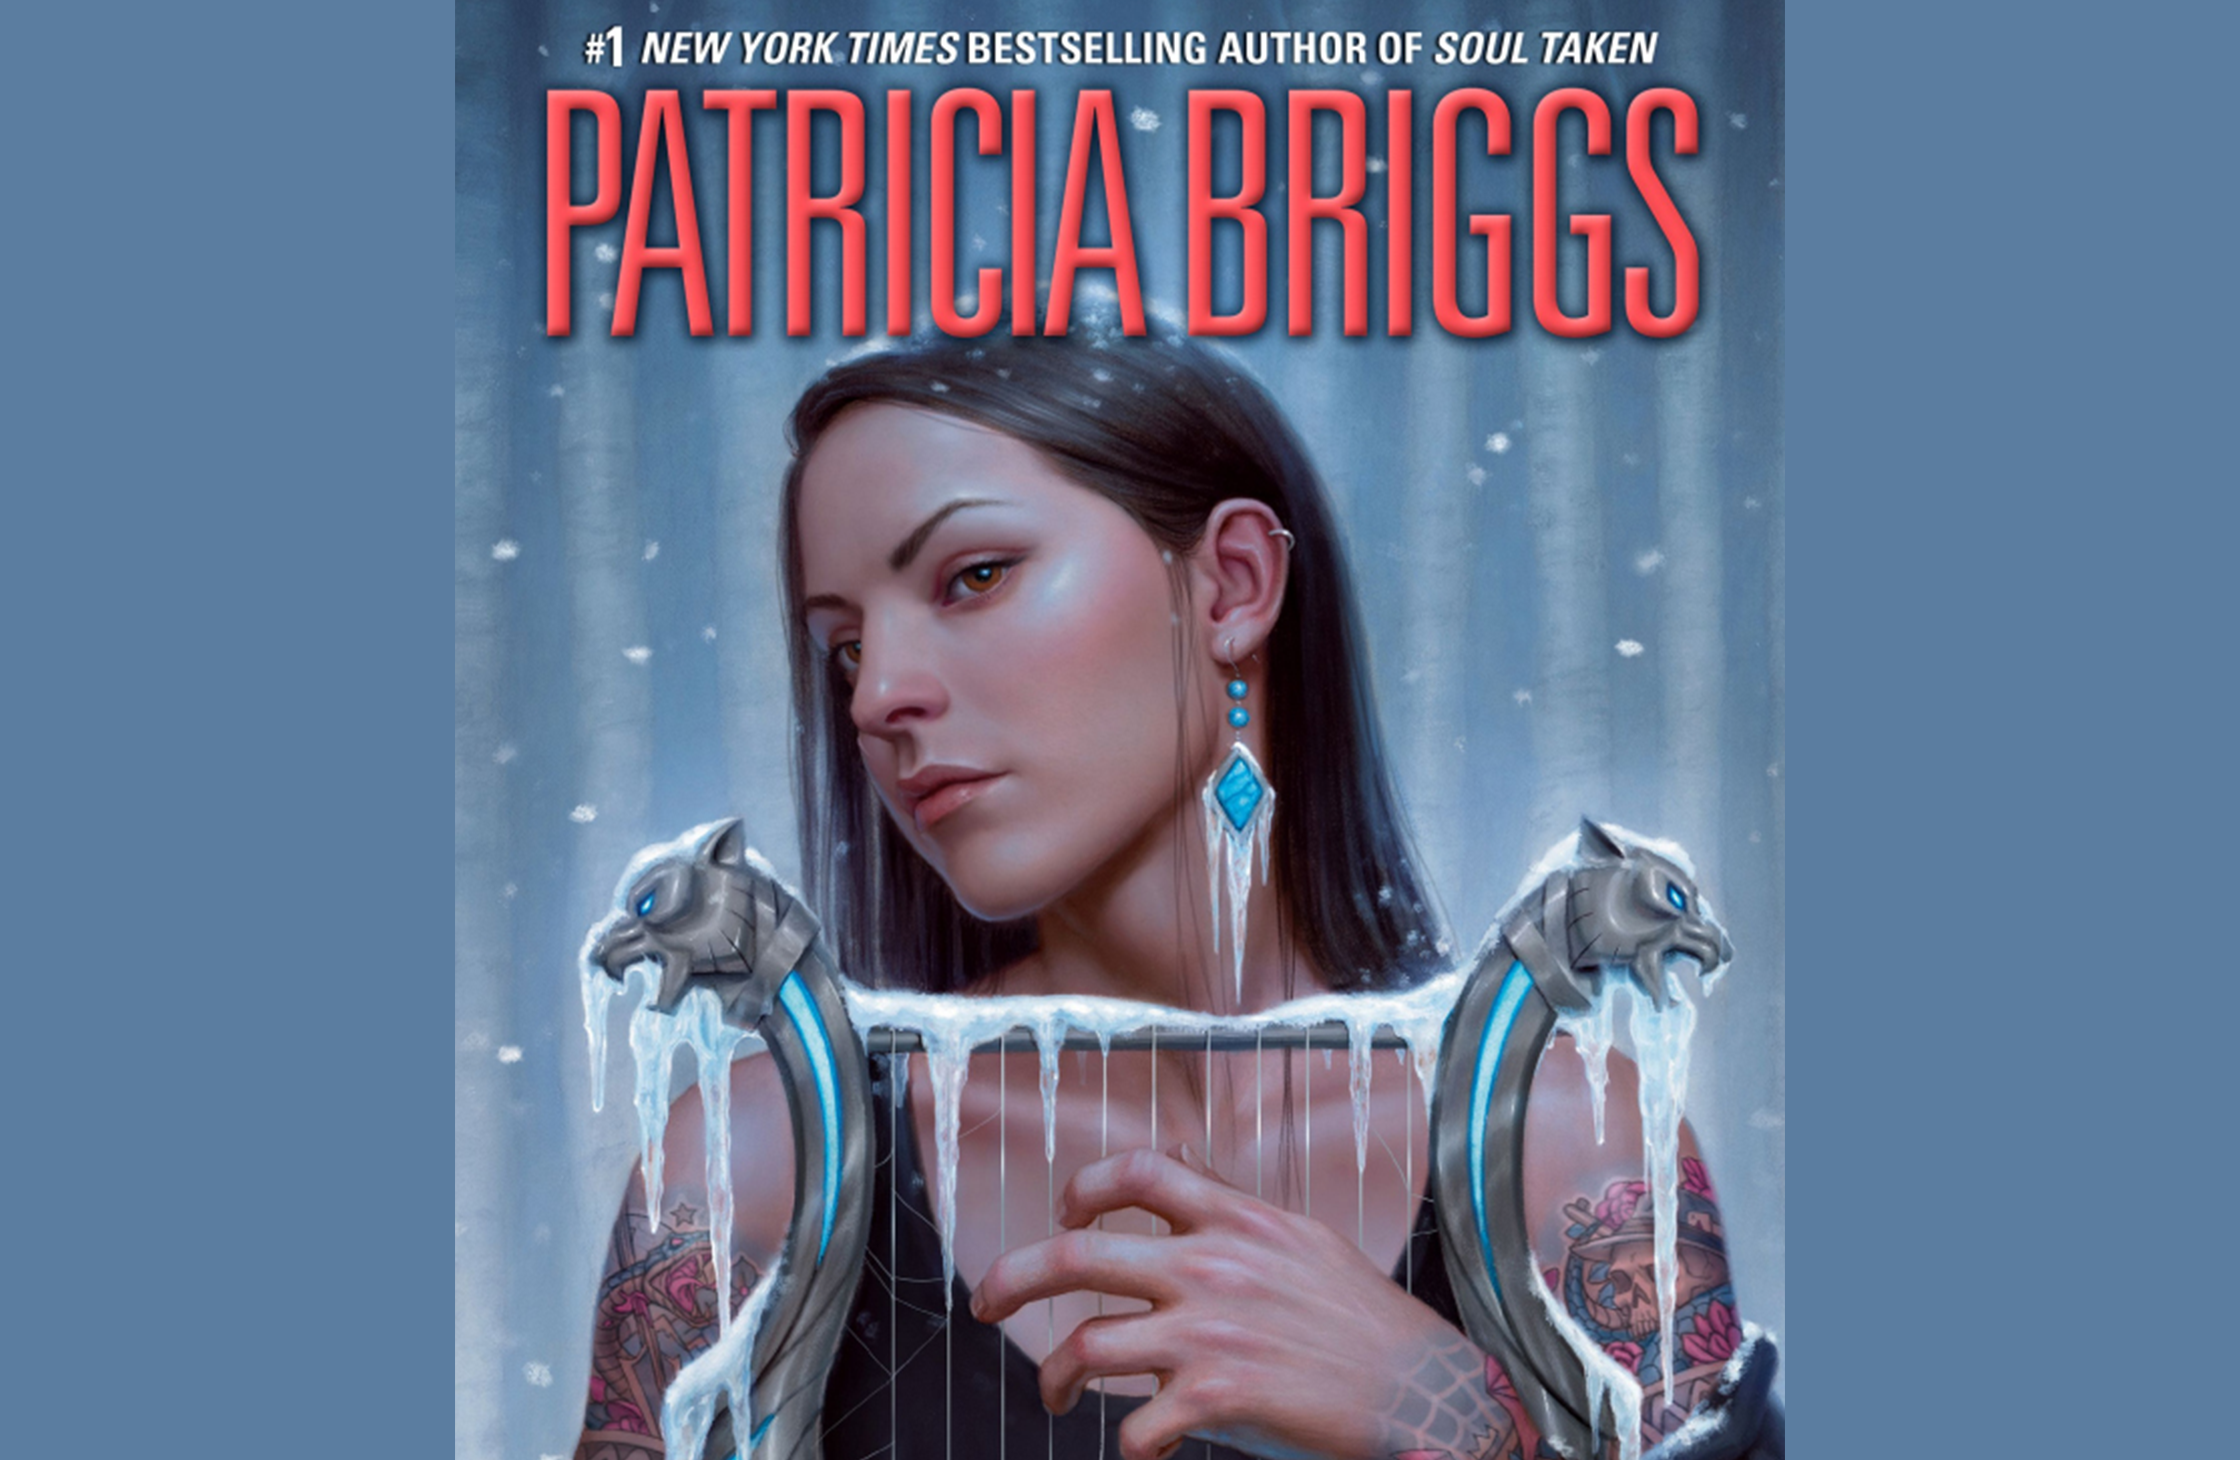 Patricia Briggs' unique blend of suburban noir and fantasy